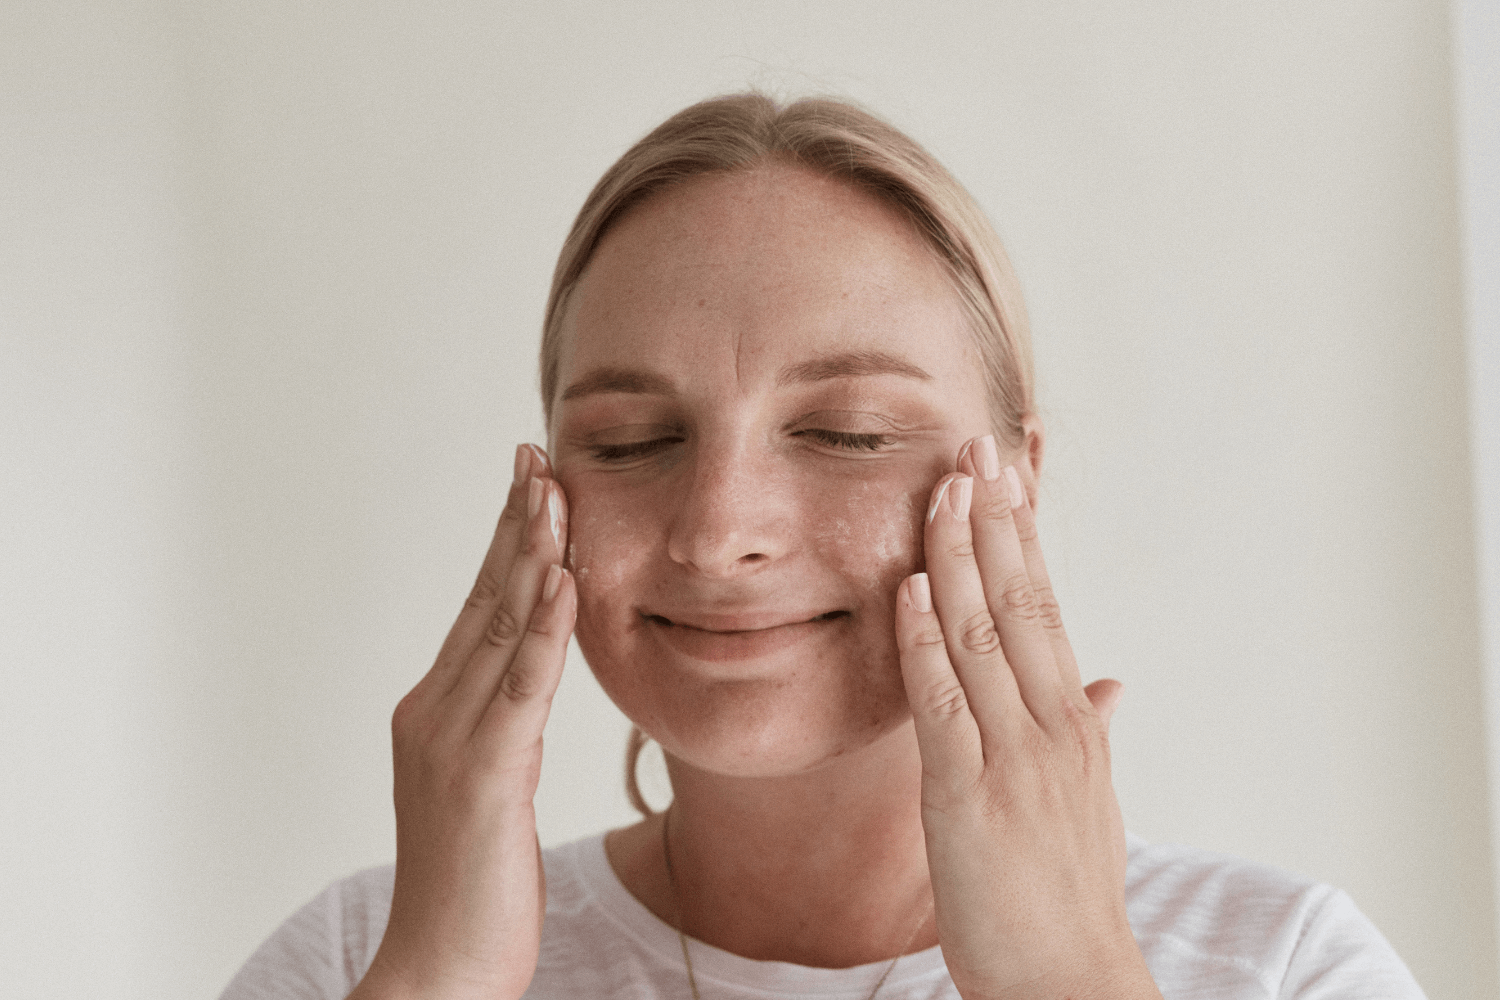 teenage acne sucks. here’s how to fix it